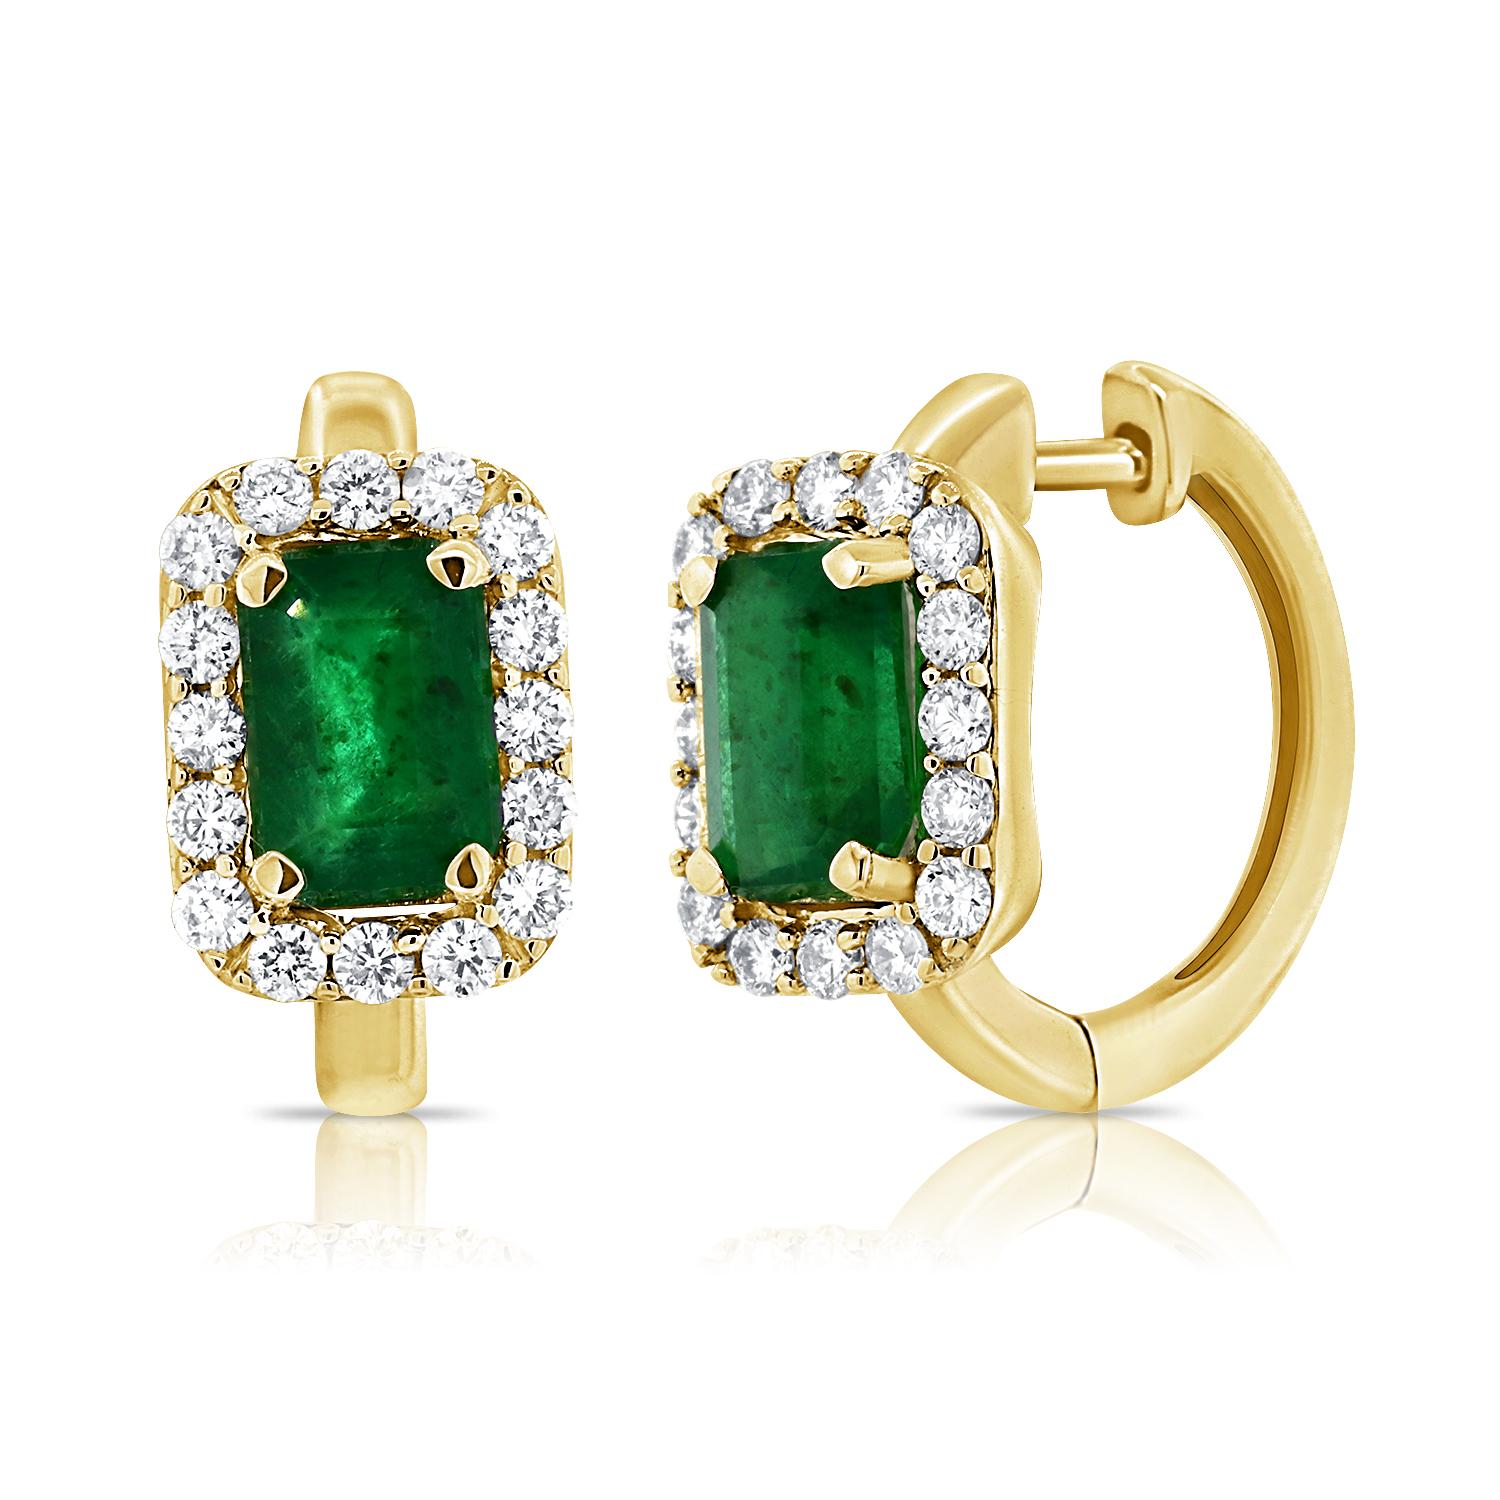 14K GOLD EMERALD & DIAMOND HUGGIE EARRING
  - Diamond Weight: 0.36 ct.
  - Emerald Weight: 1.28 ct. 
  -  Huggie Size: 0.50 